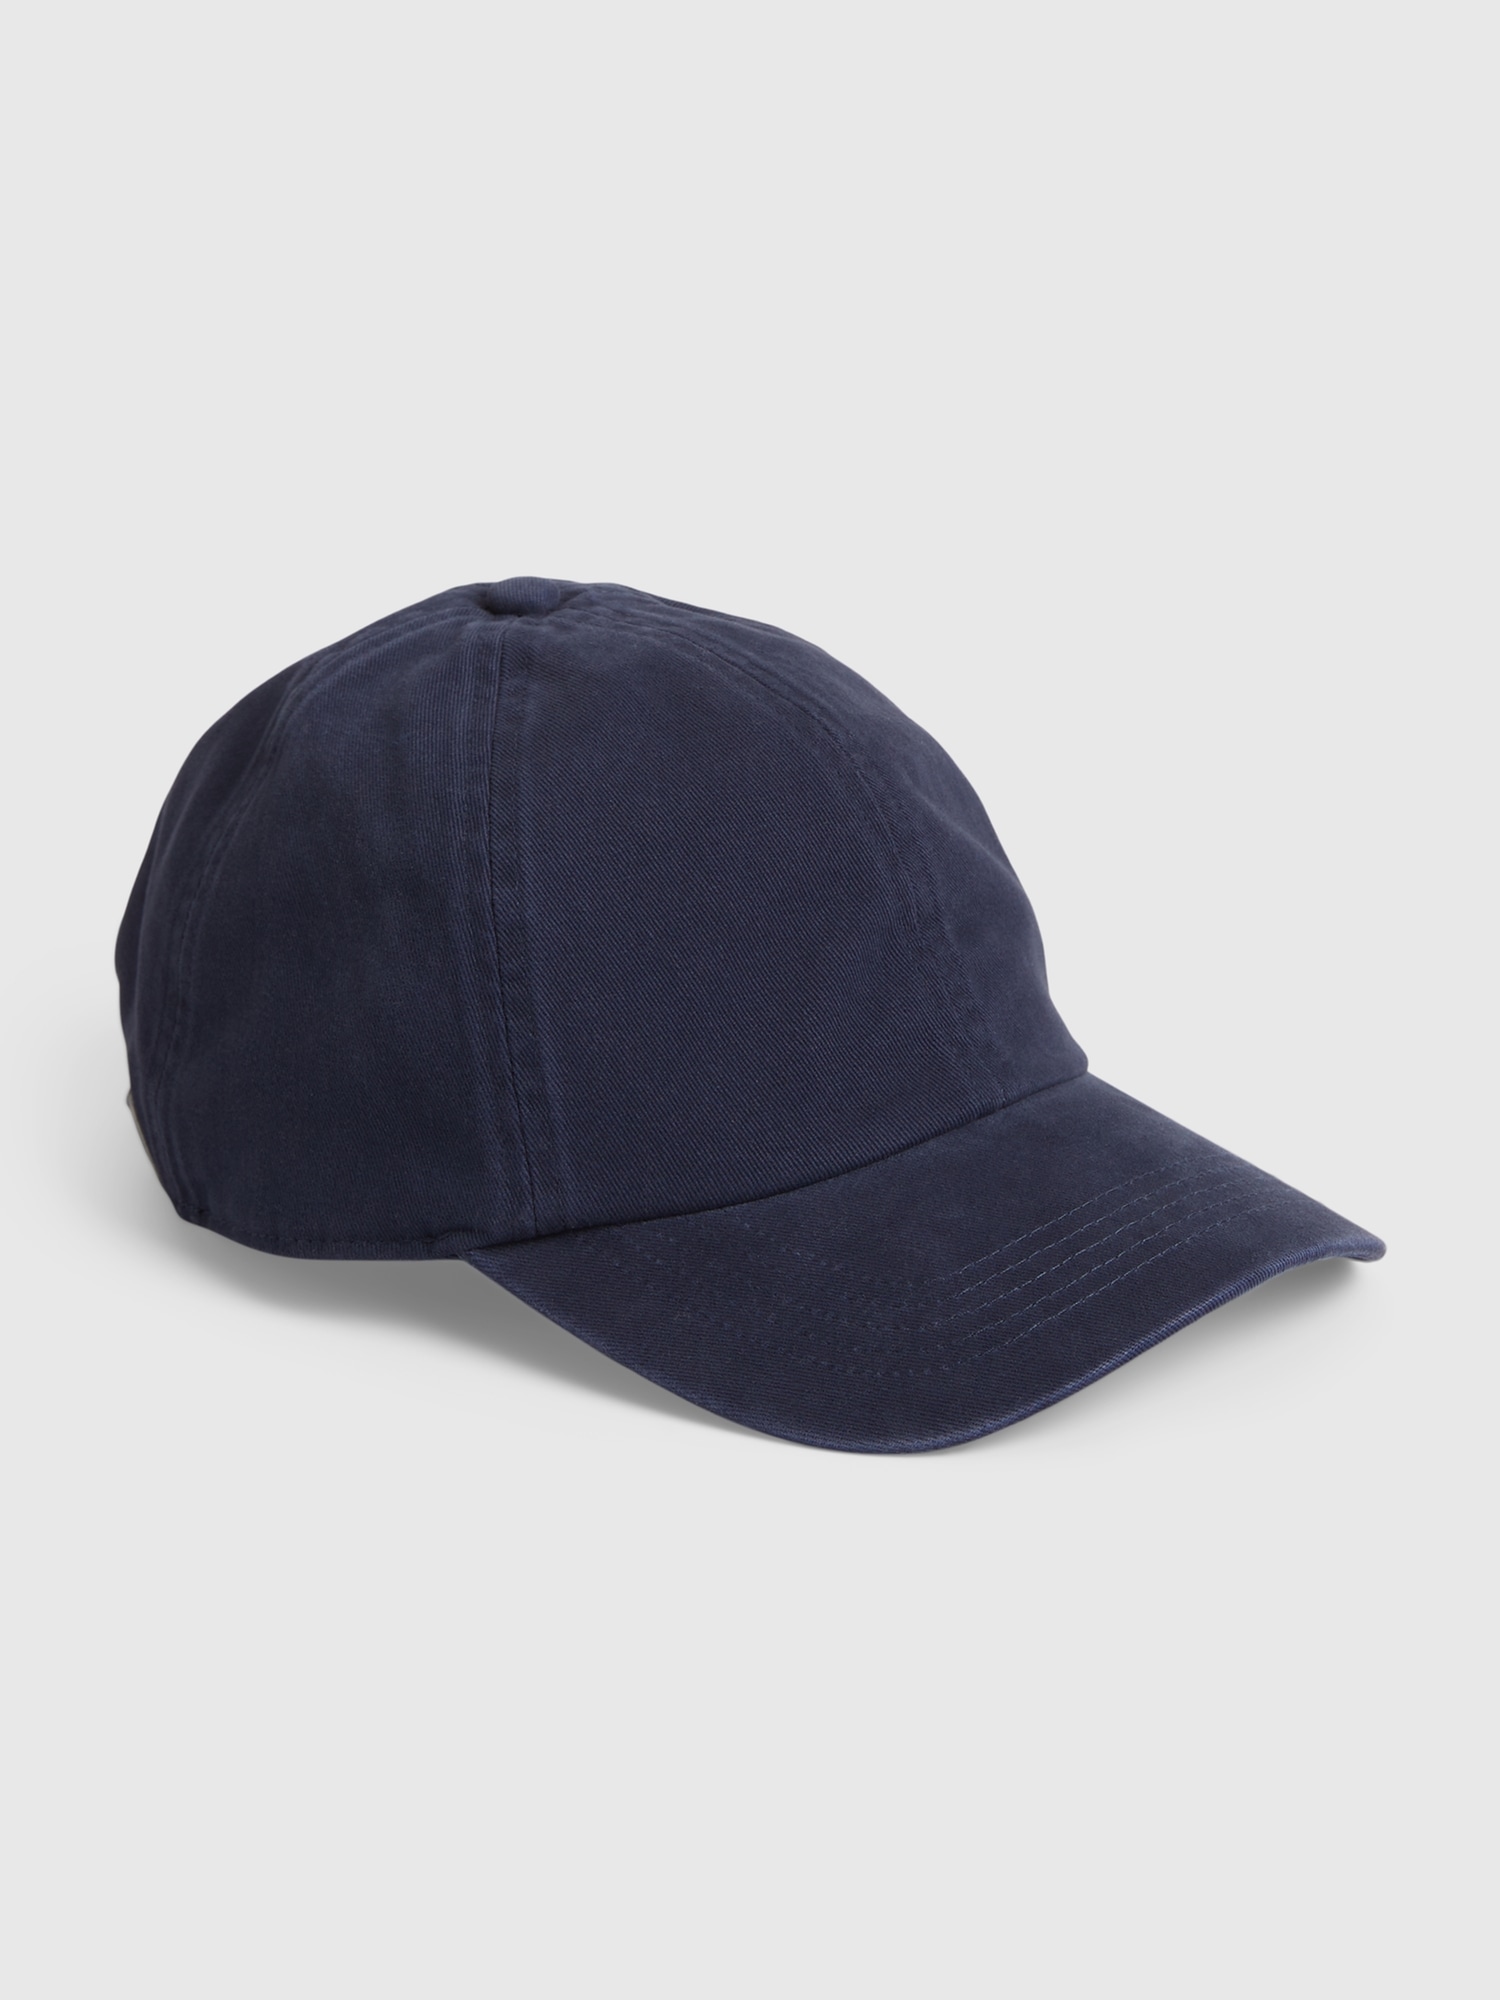 Men's 100% Organic Cotton Washed Baseball Hat by Gap Navy NY One Size